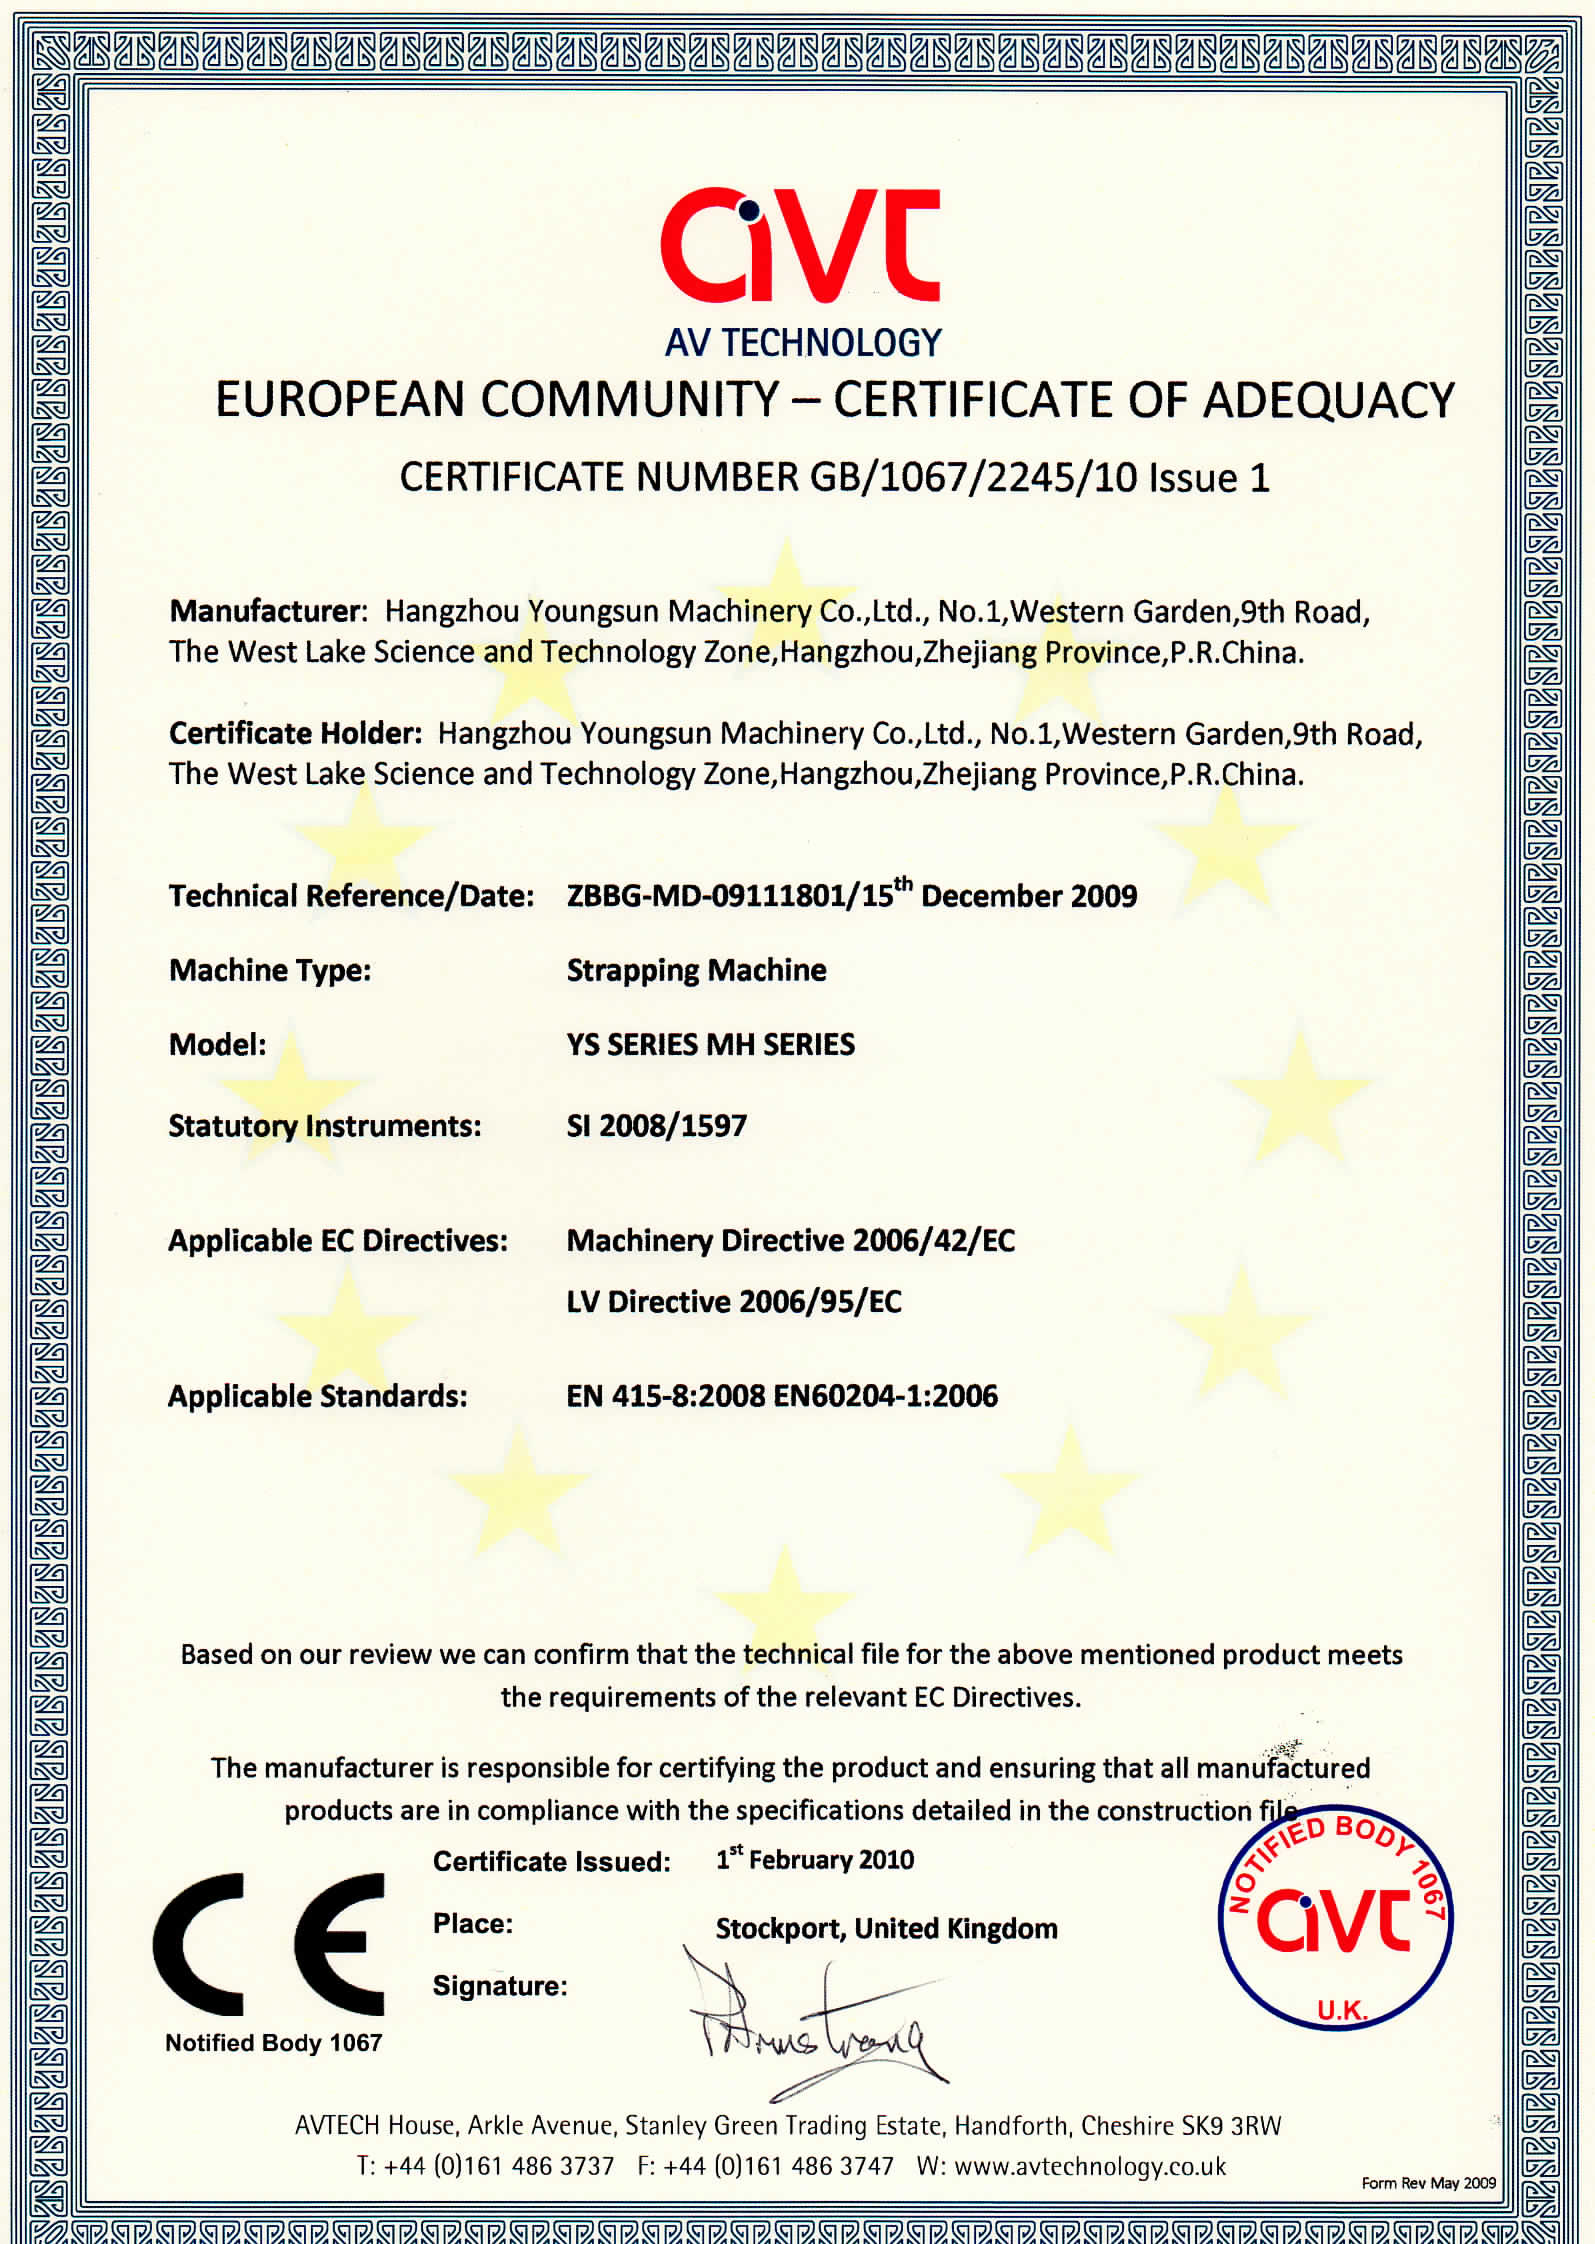 Certificate of Adequacy - European Community